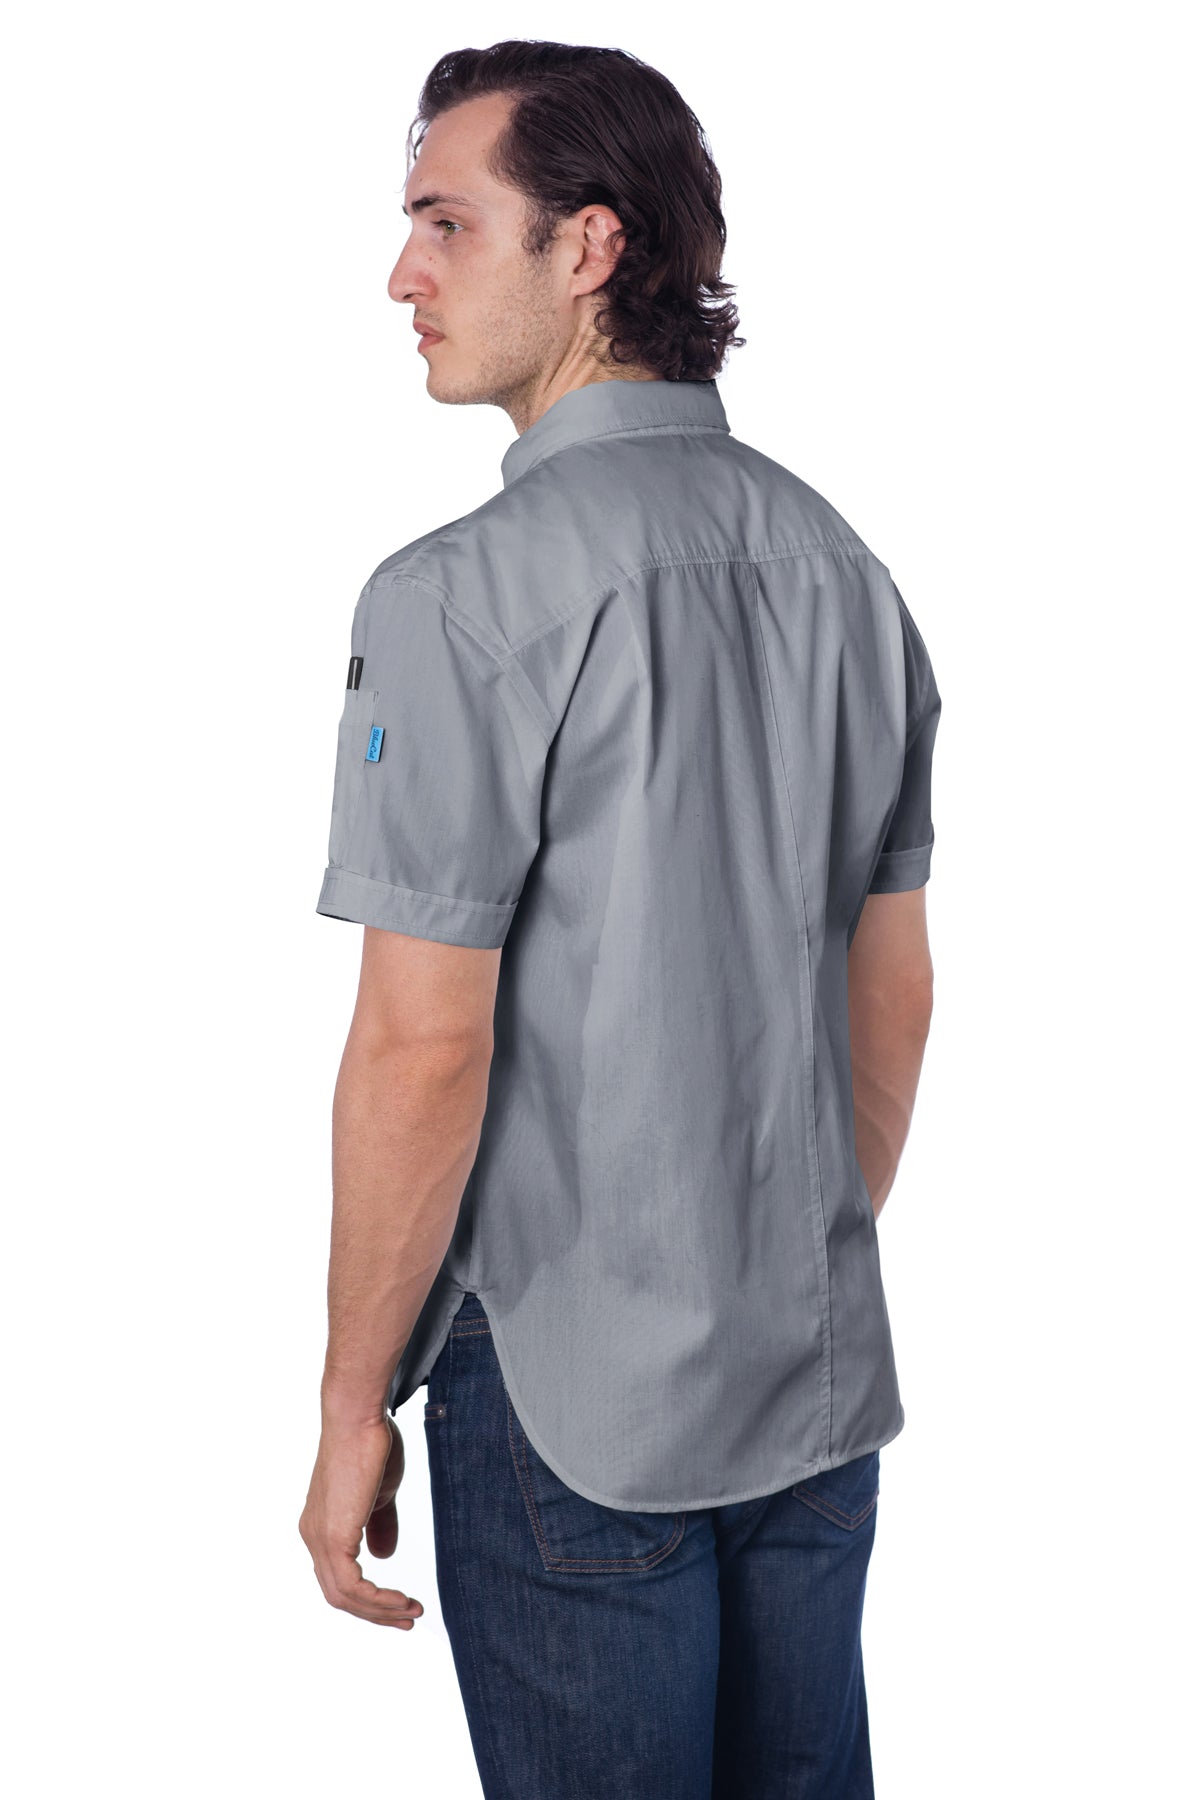 Work Shirt Steel Gray